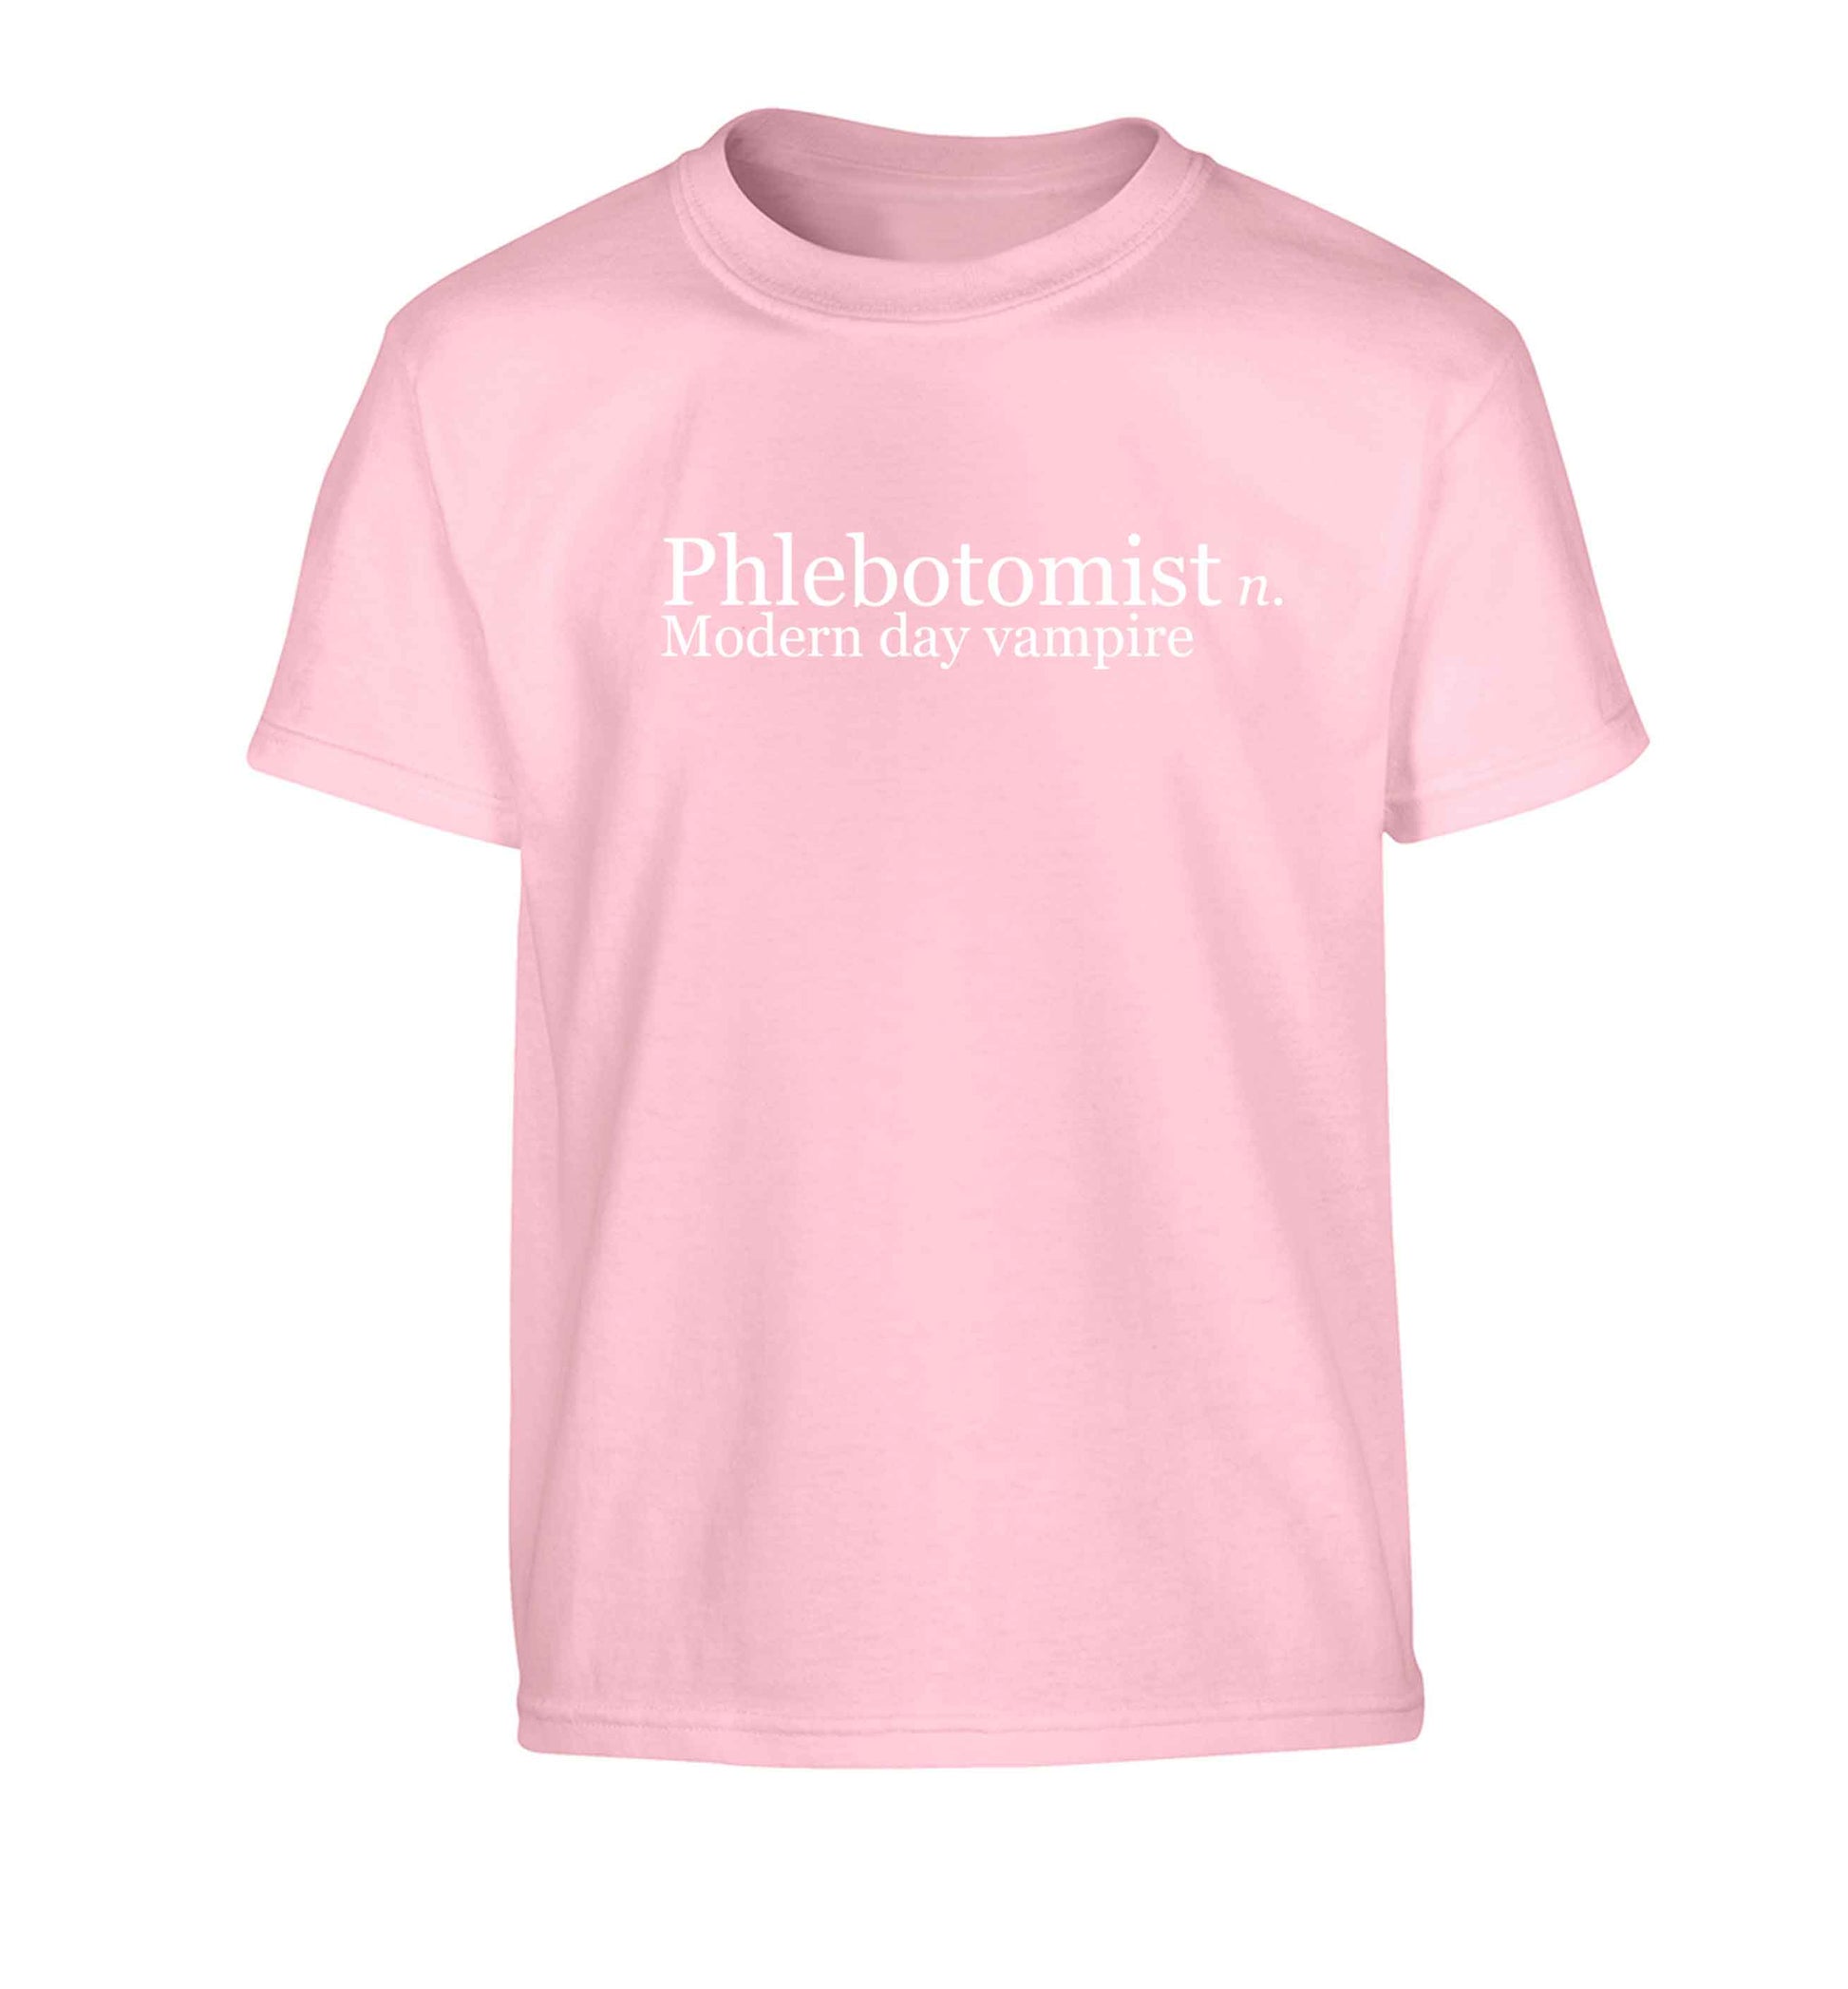 Phlebotomist - Modern day vampire Children's light pink Tshirt 12-13 Years